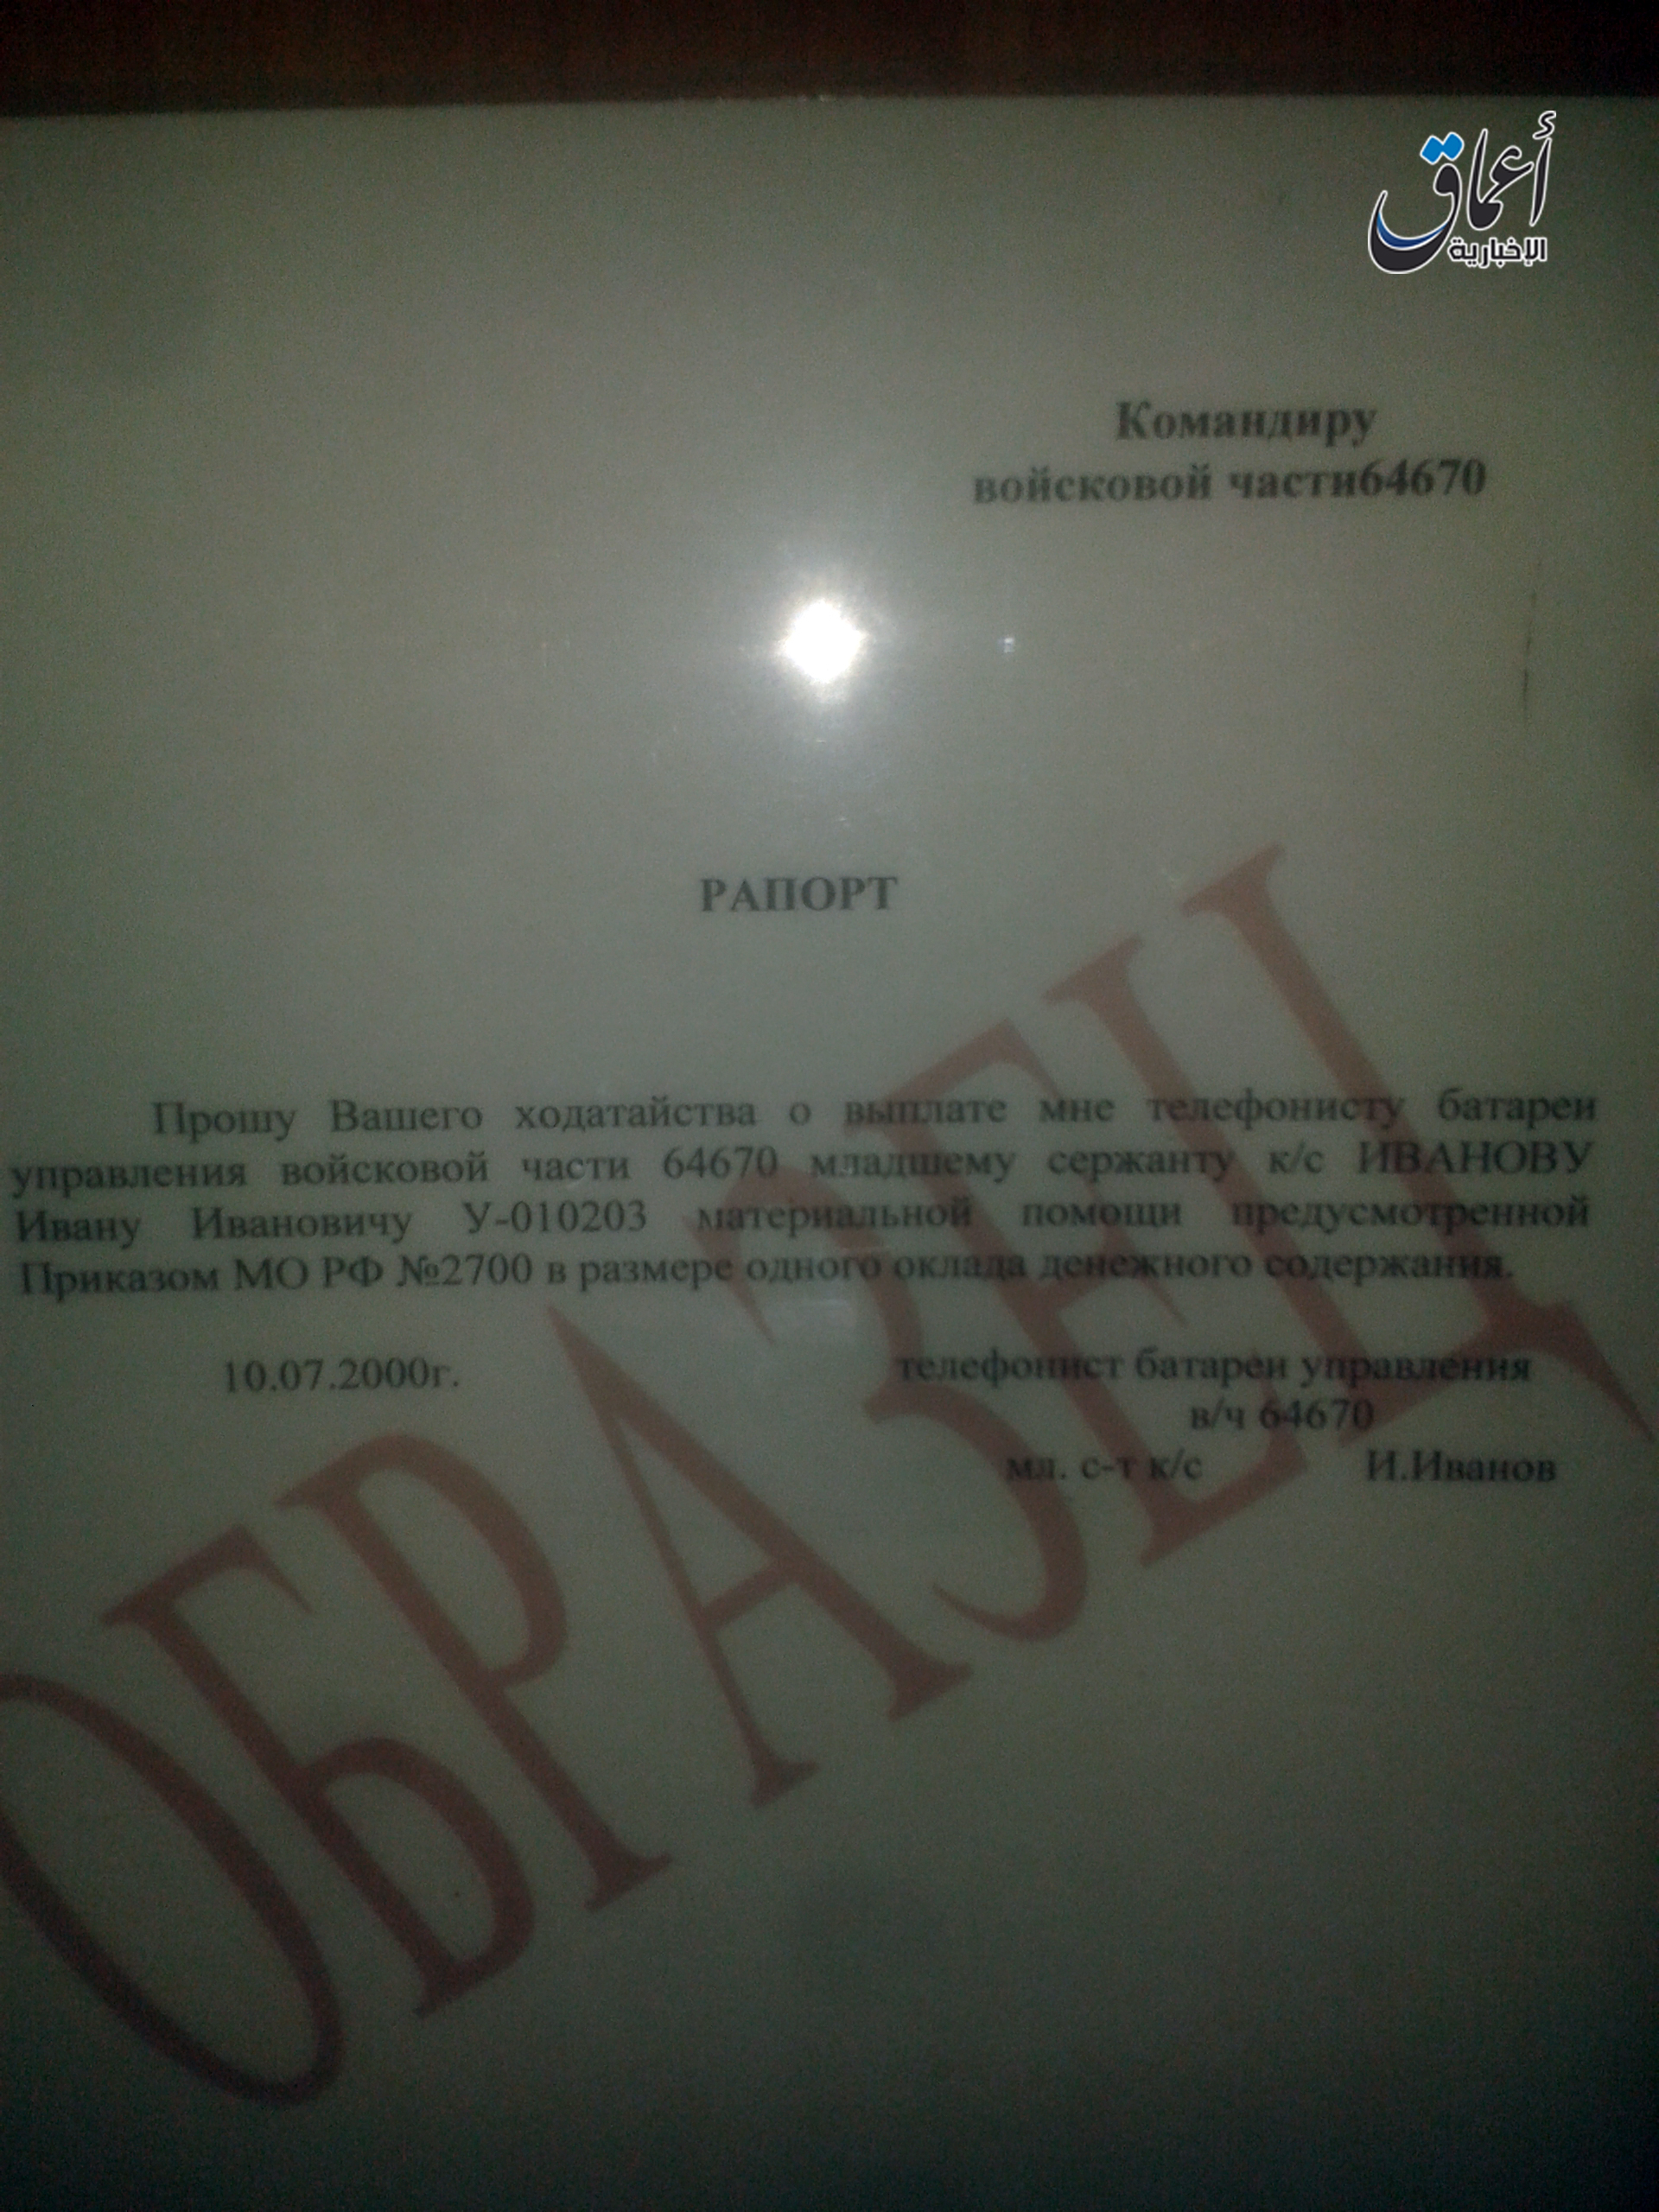 Russian document 1